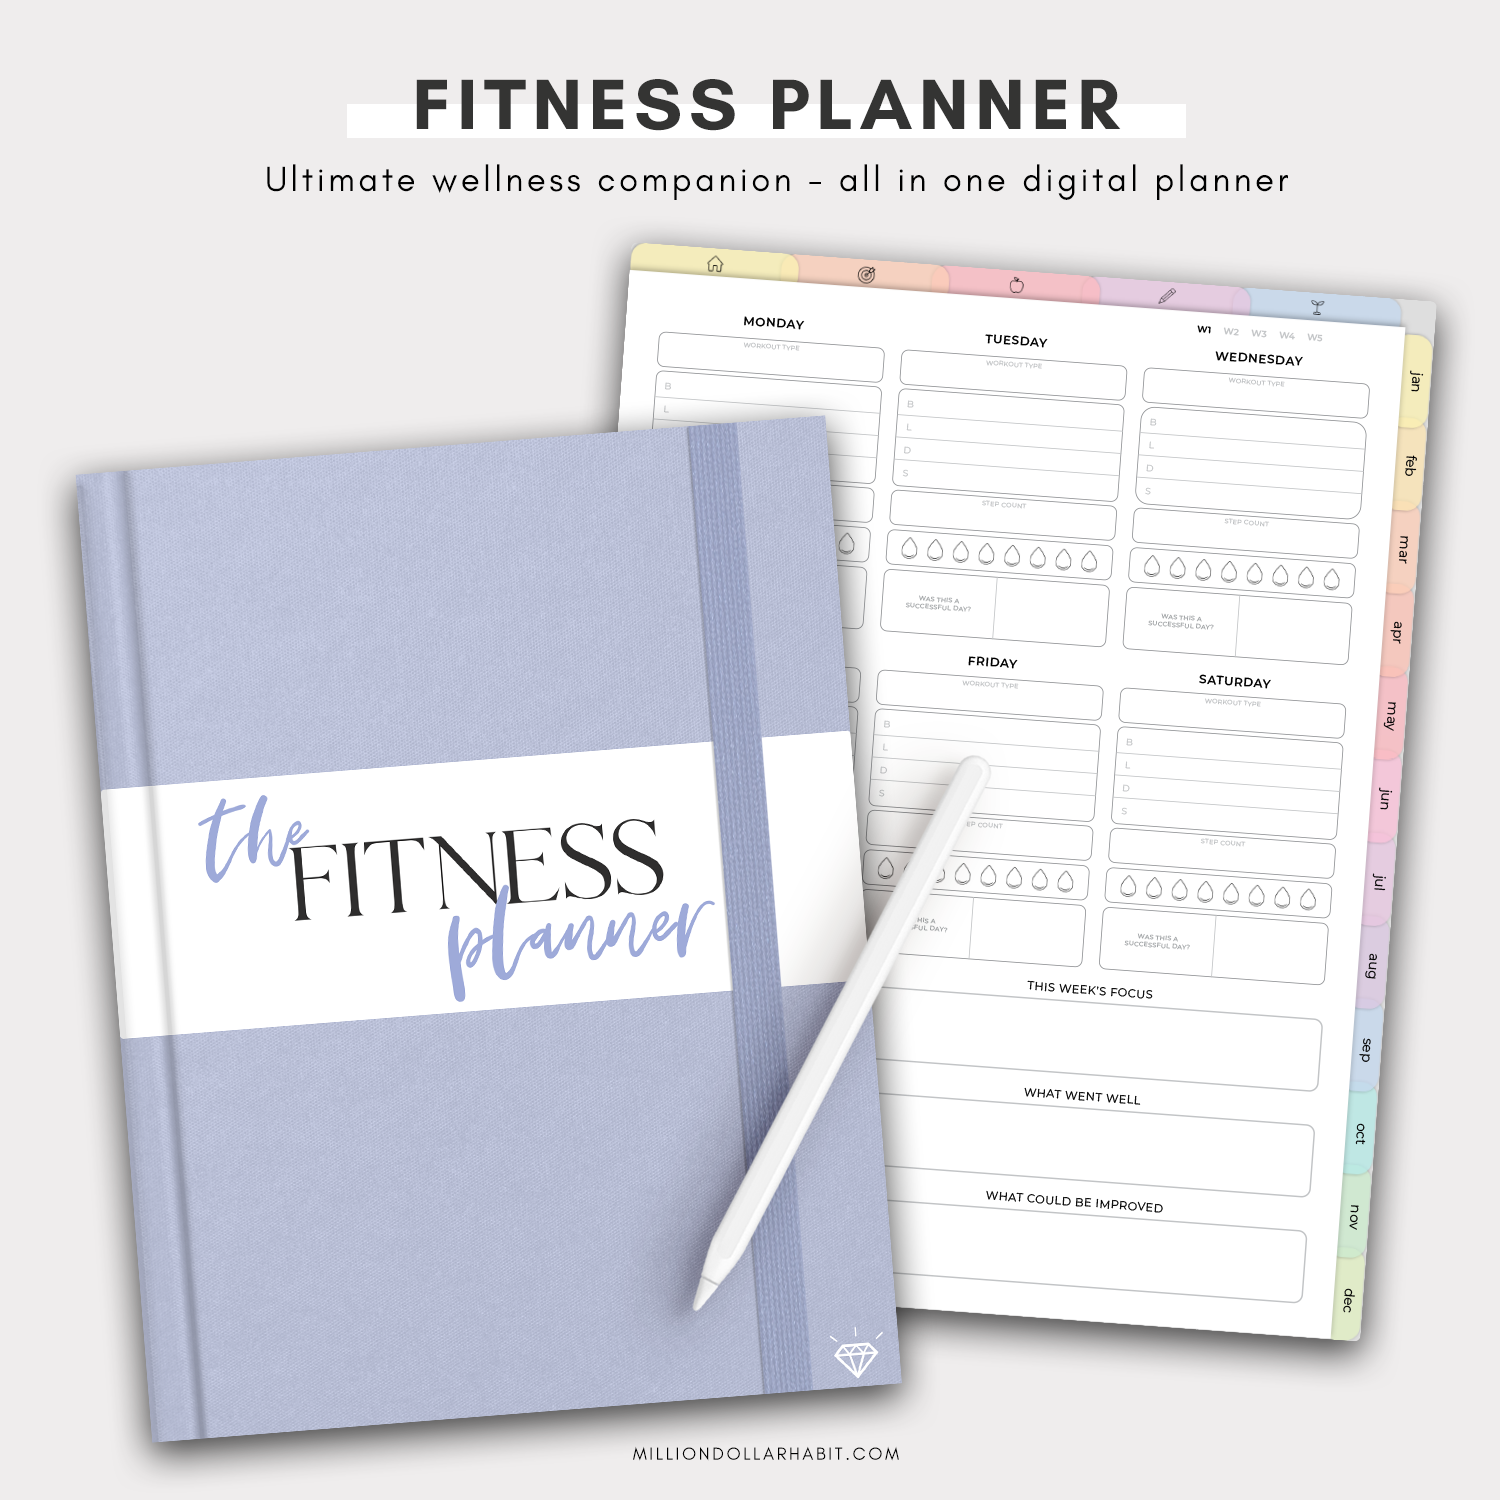 Fitness Planner - Million Dollar Habit - Digital Planner